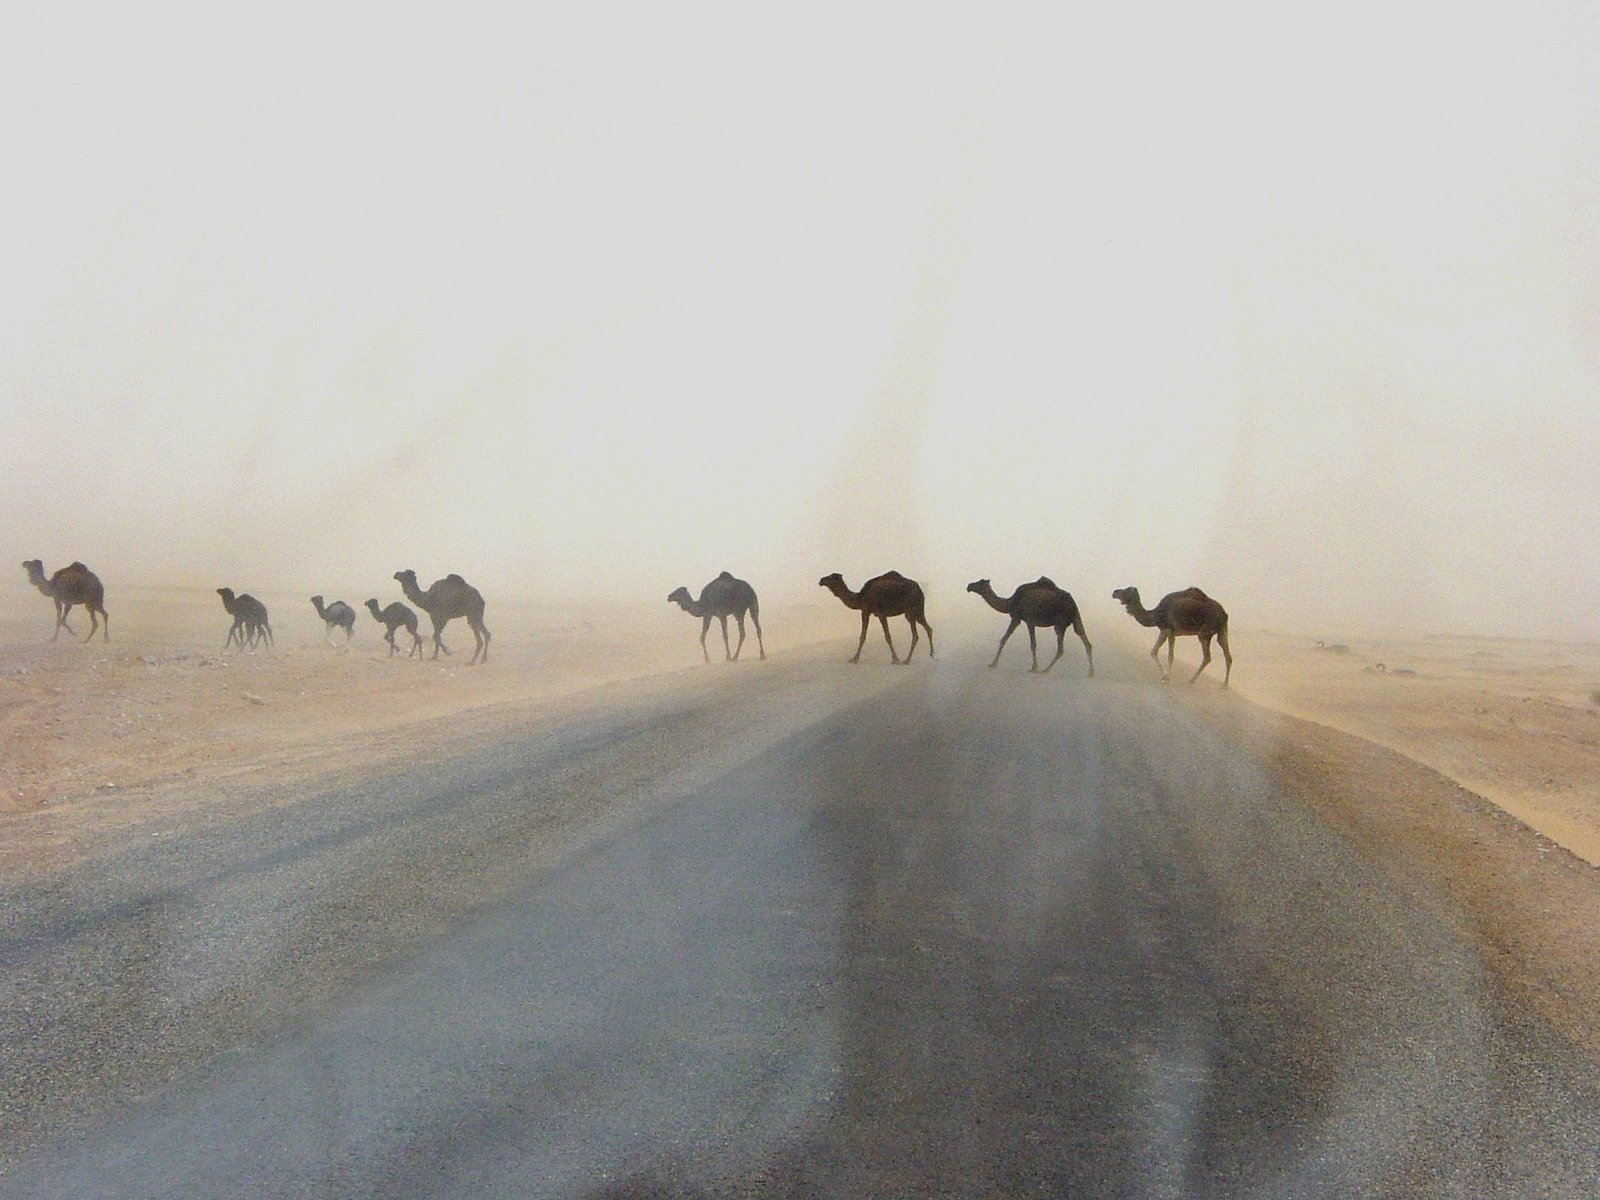 Camellos en la tormenta, abril 2005 - Susa